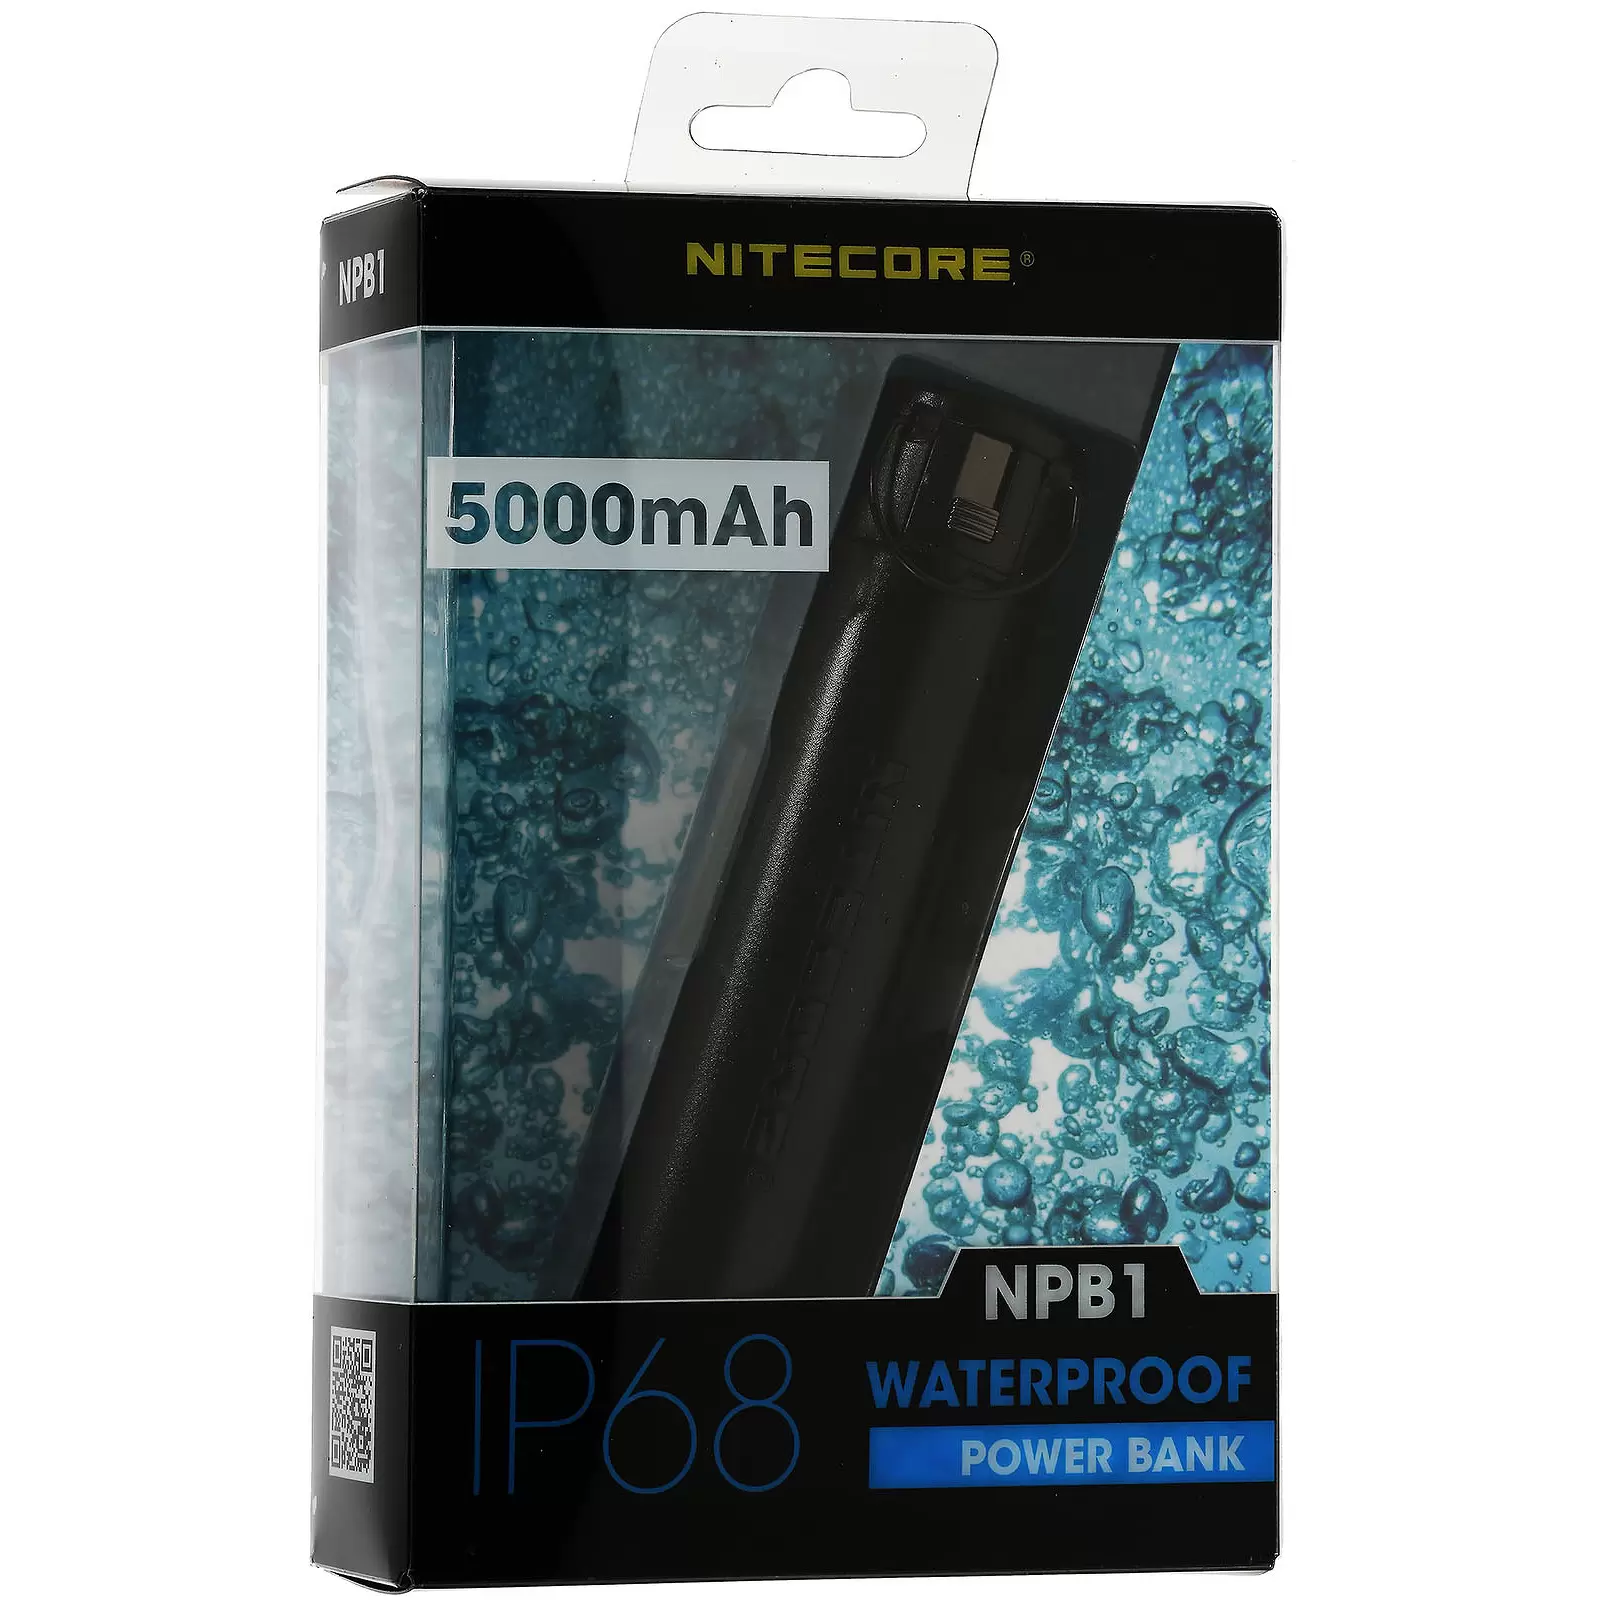 Nitecore Outdoor-Powerbank NPB1, 5.0Ah mit Micro-USB, wasserdicht